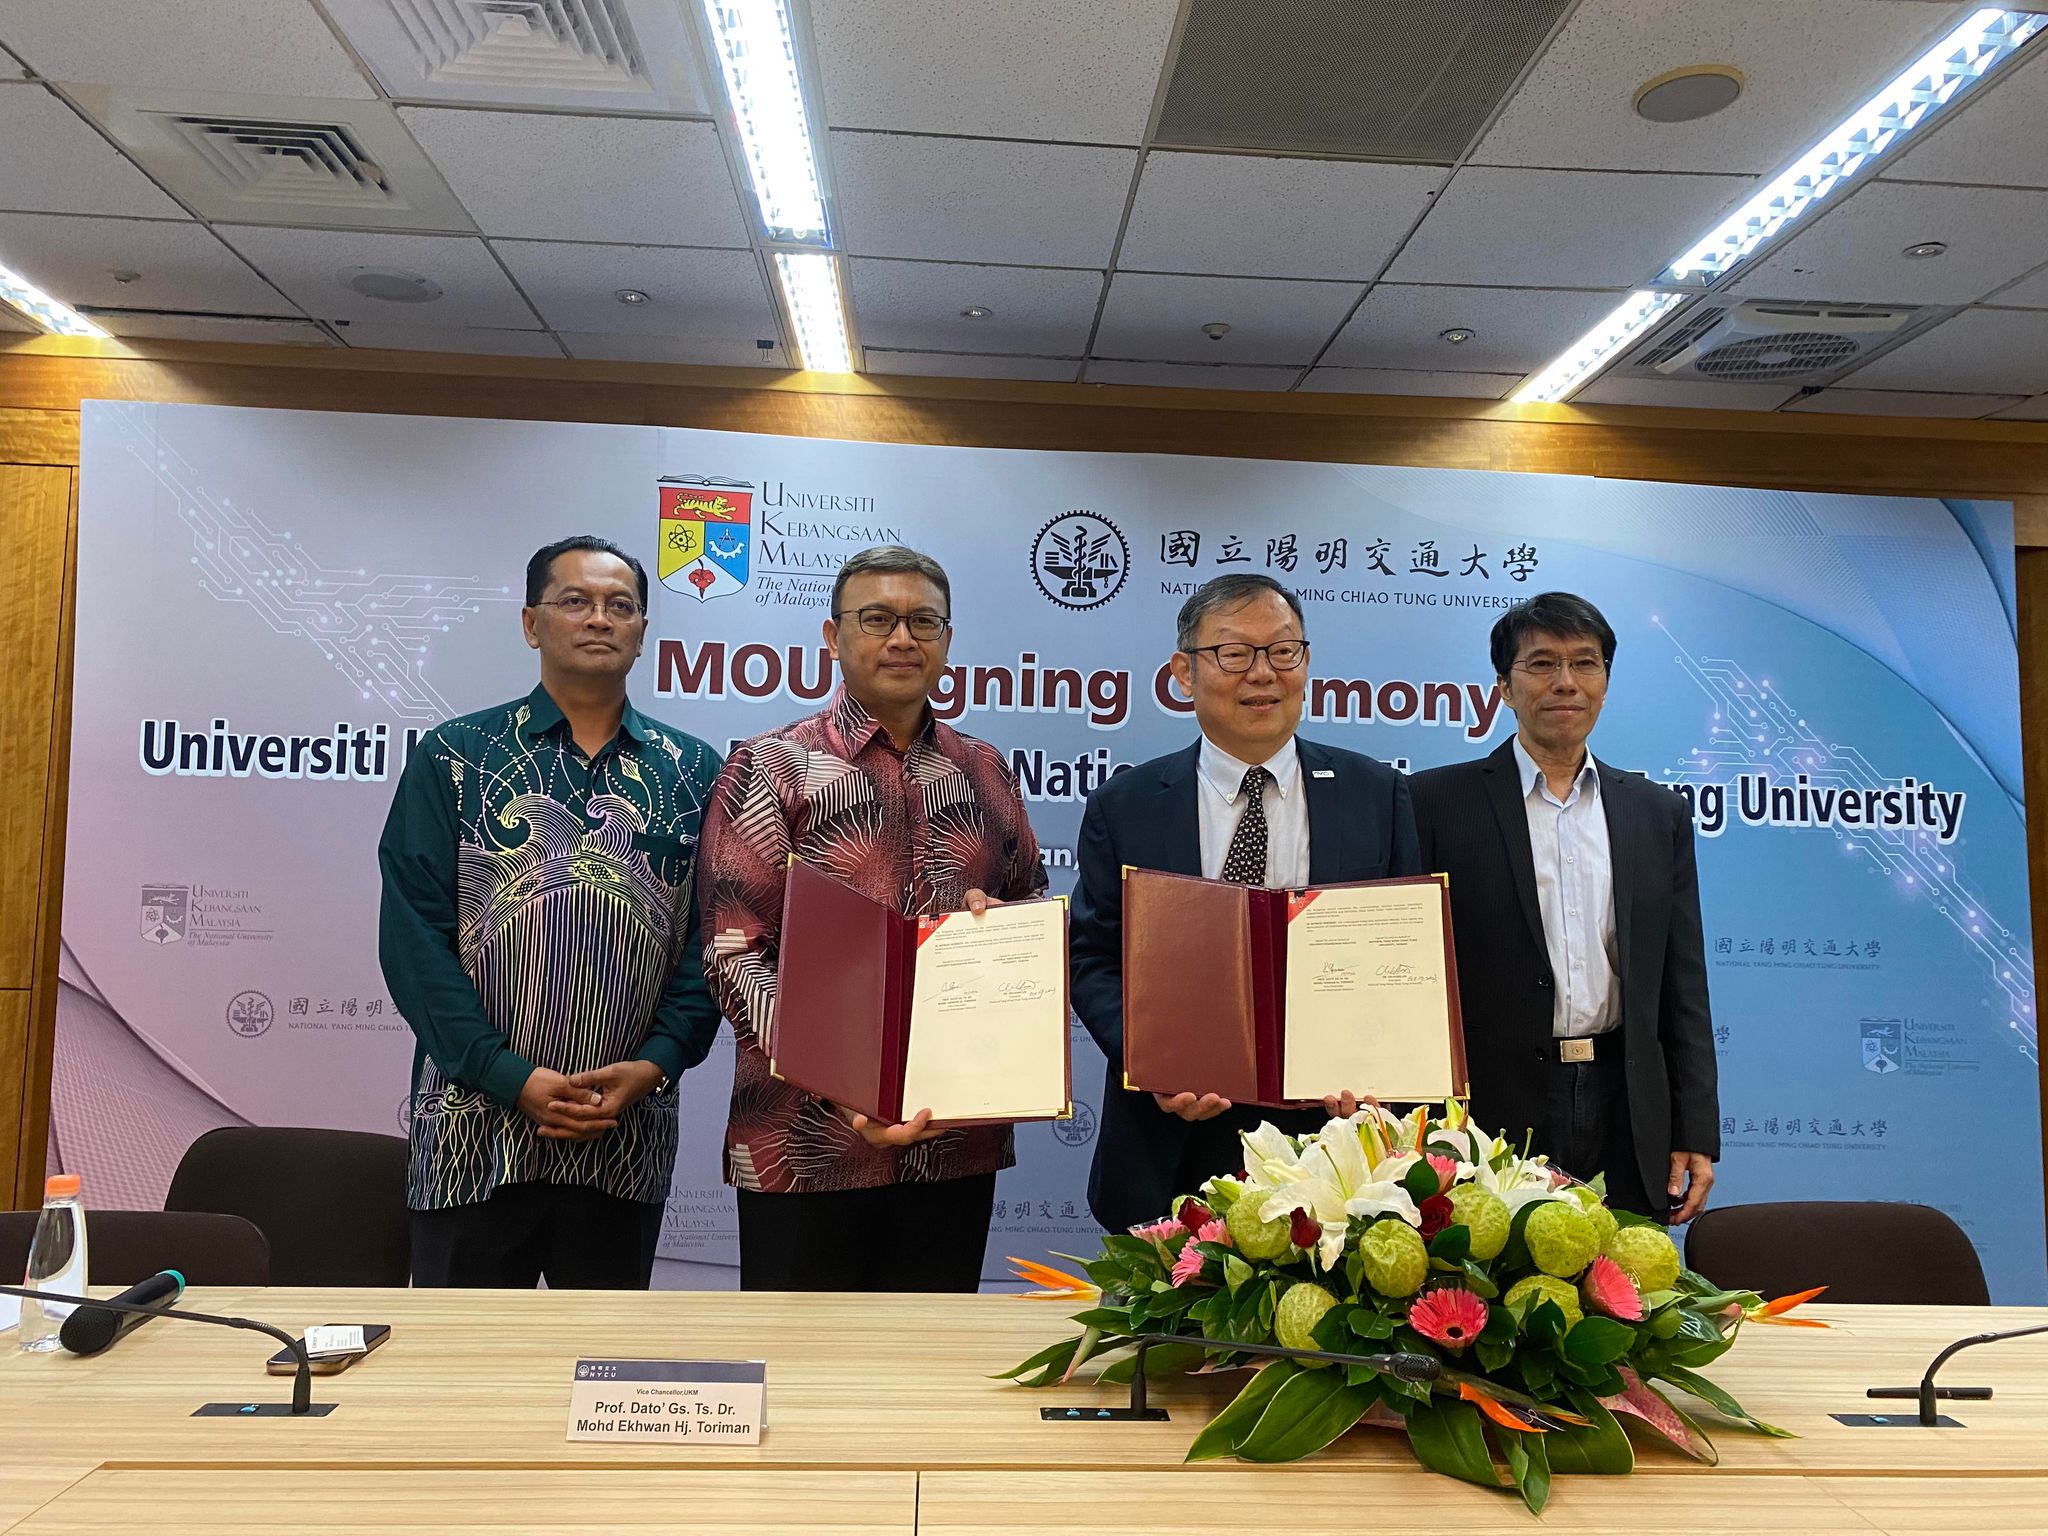 MOU Signing Ceremony between National Yang Ming Chiao Tung University (NYCU) & Universiti Kebangsaan Malaysia (UKM)'s pic